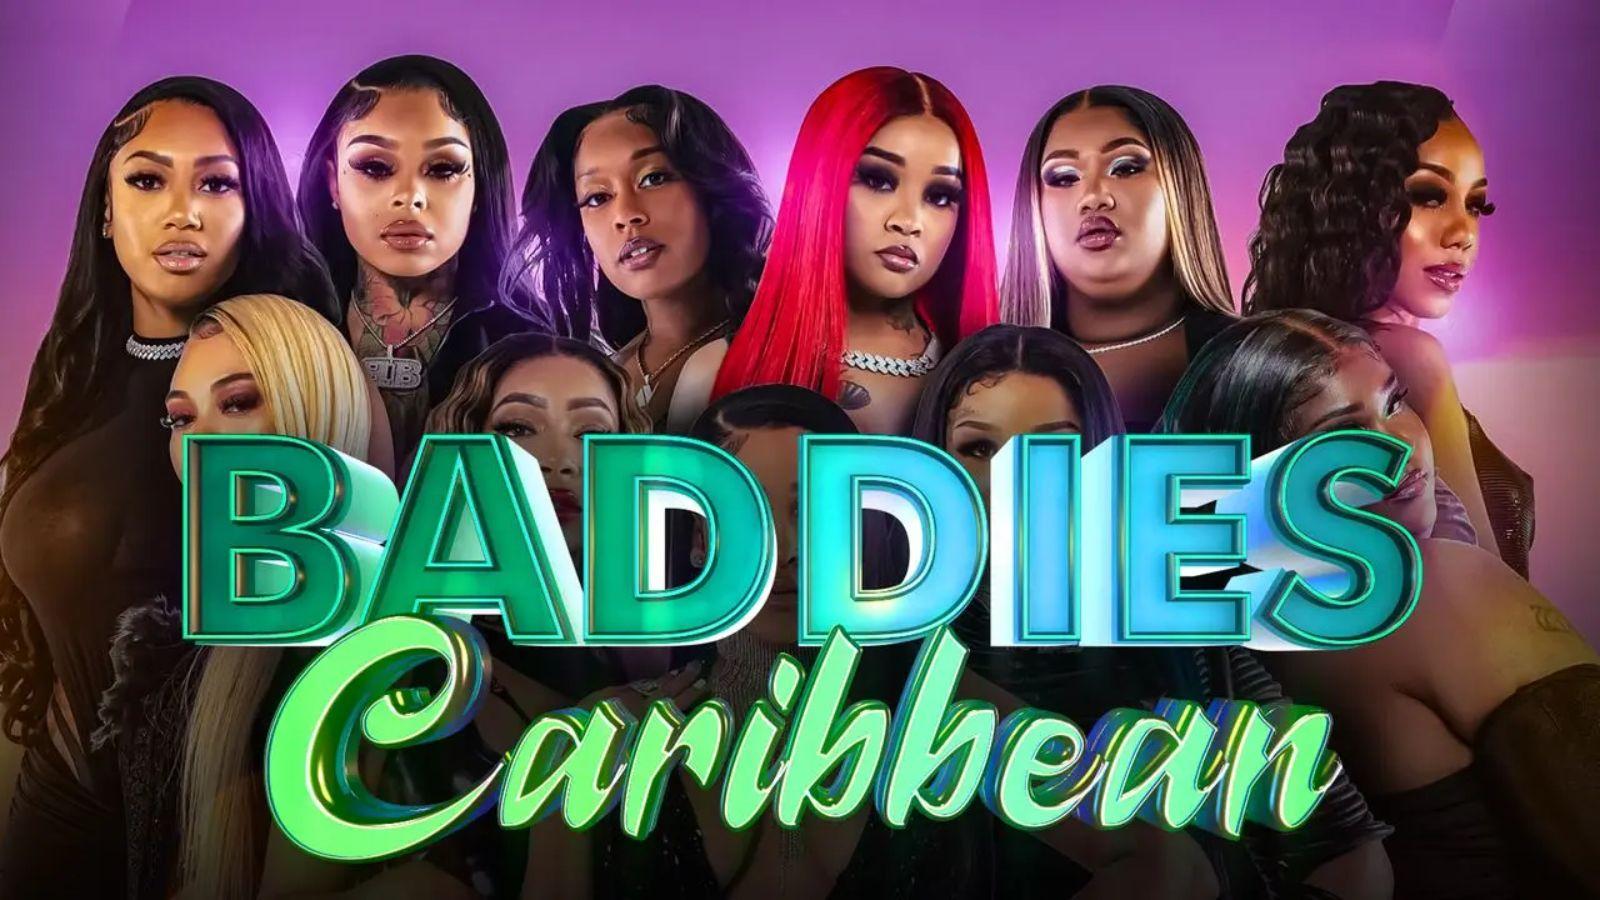 Baddies Caribbean cast